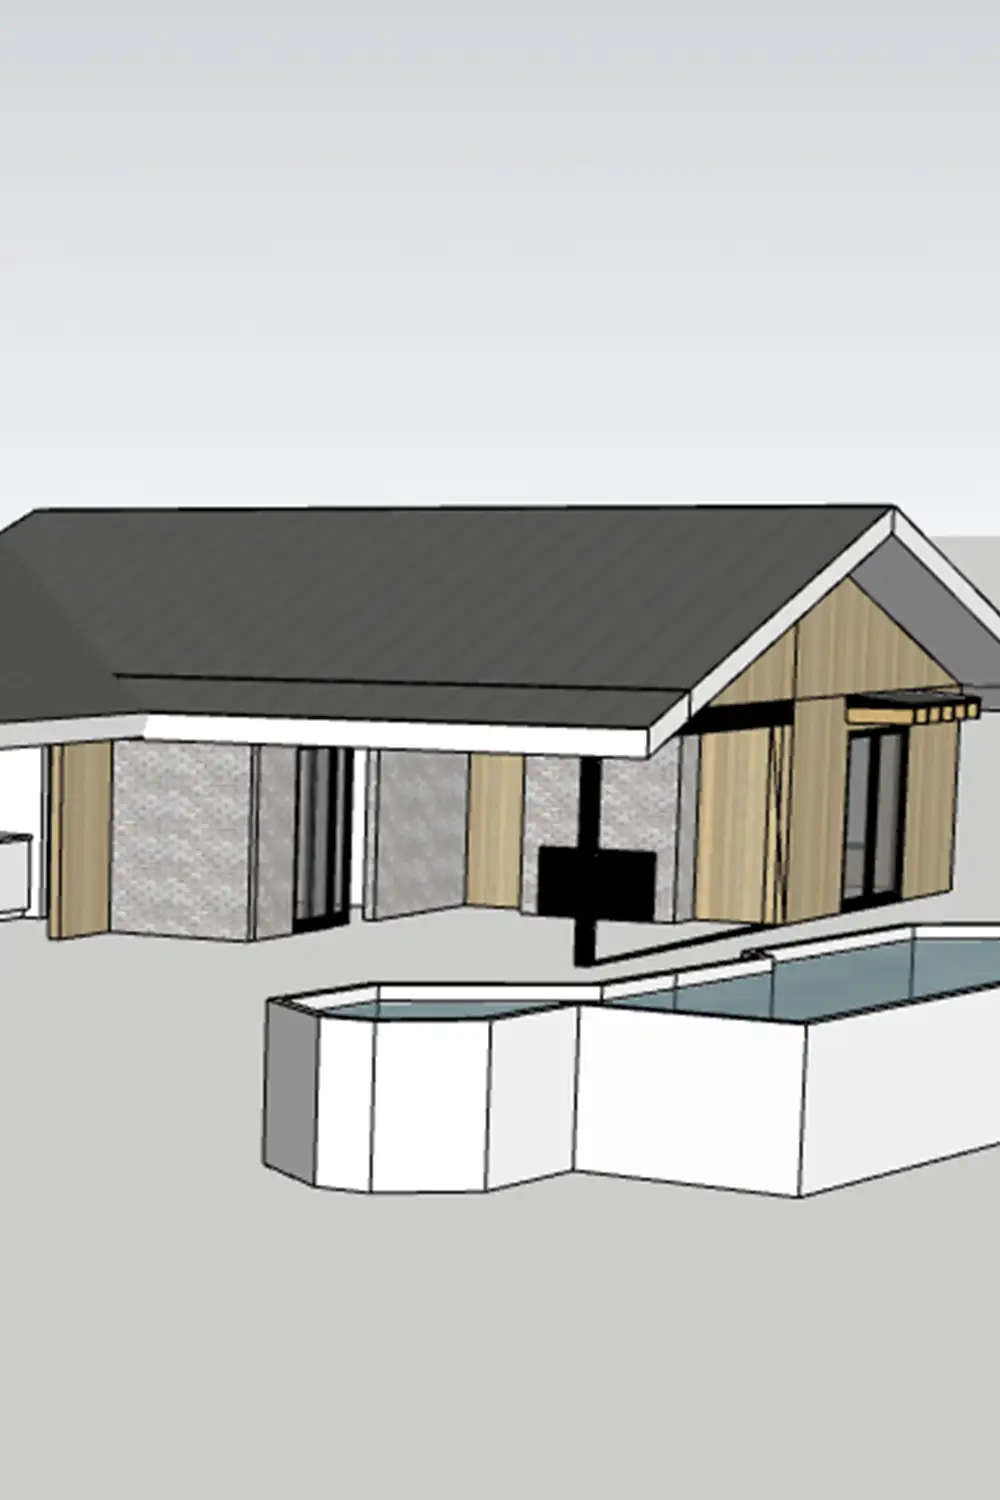 North Tustin Home Design drawing